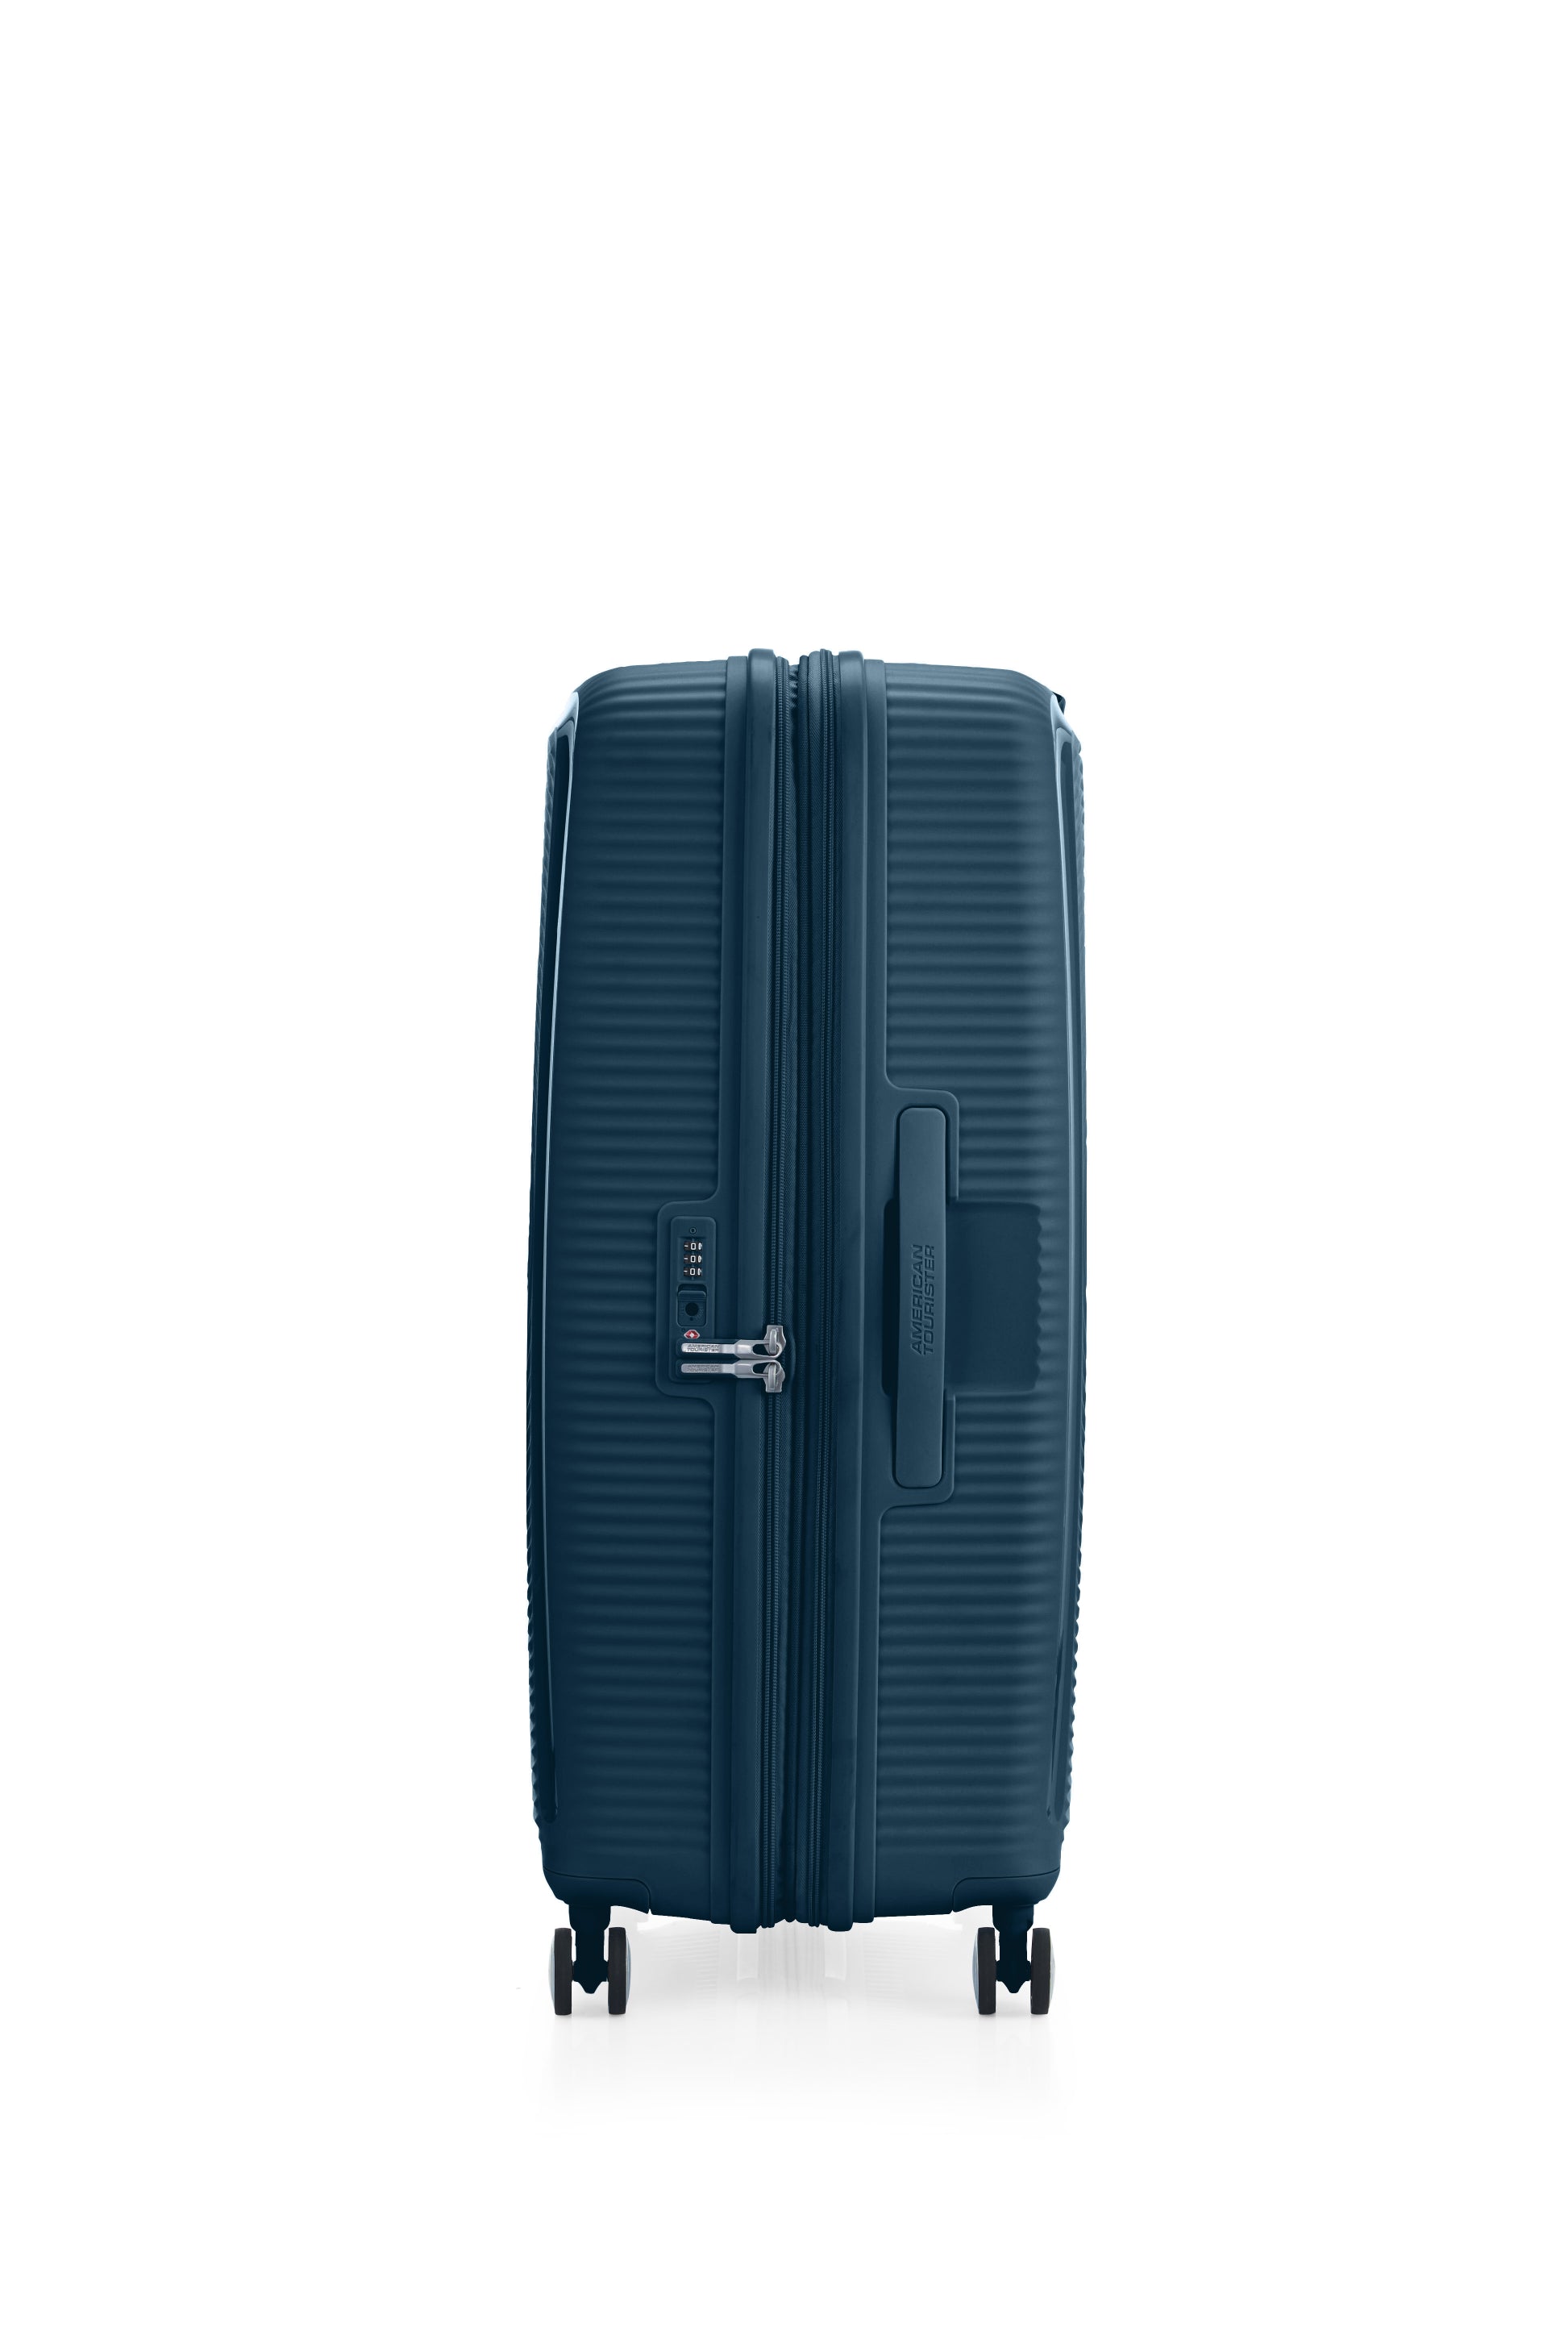 American Tourister - Curio 2.0 80cm Large Suitcase - Varsity Green - 0